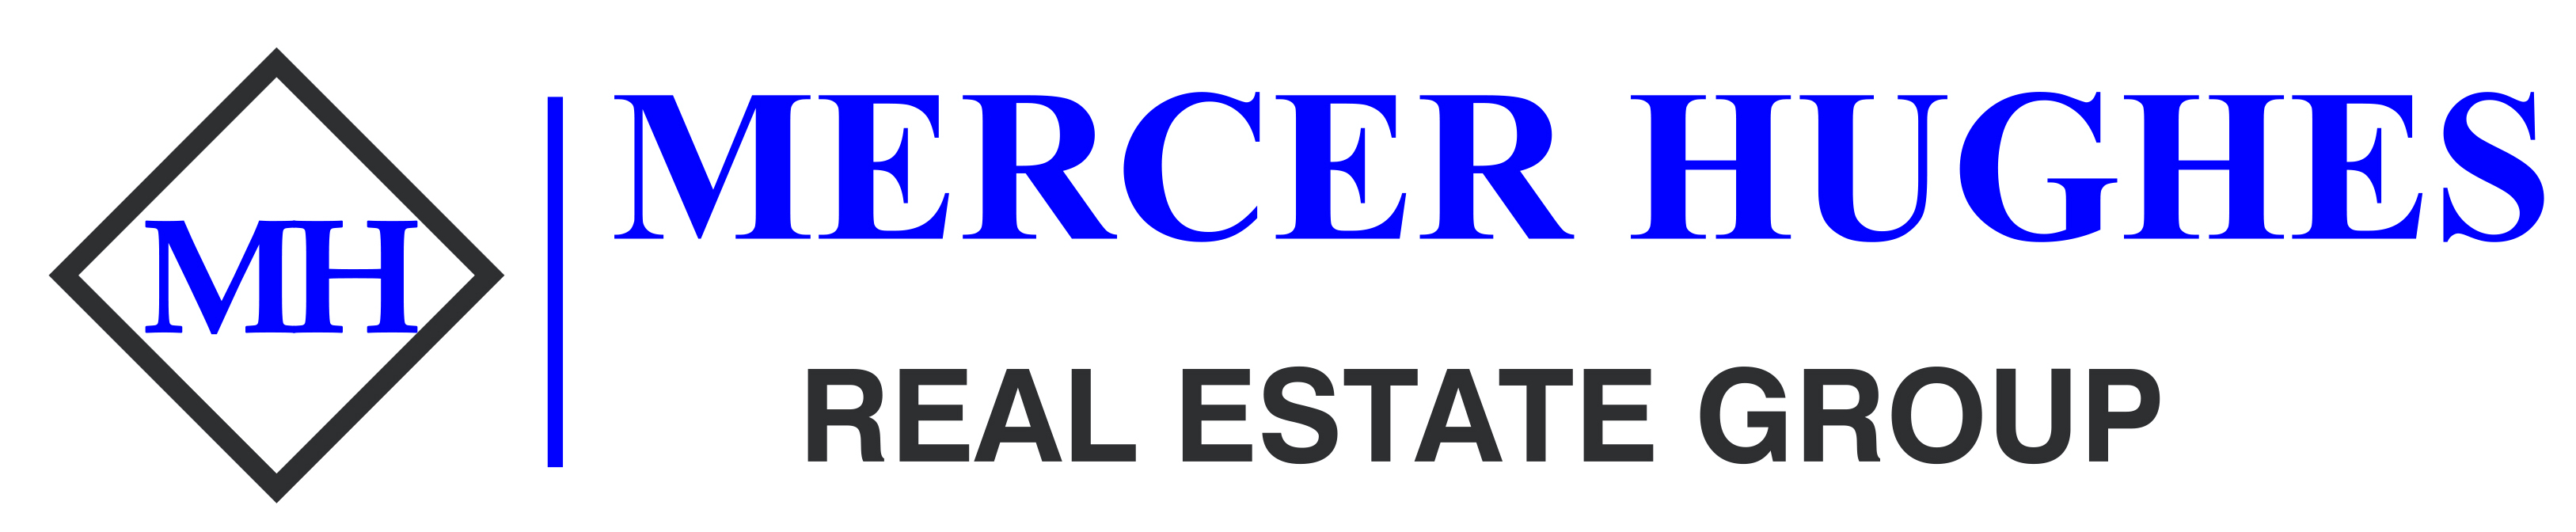 Mercer Hughes Real Estate Group